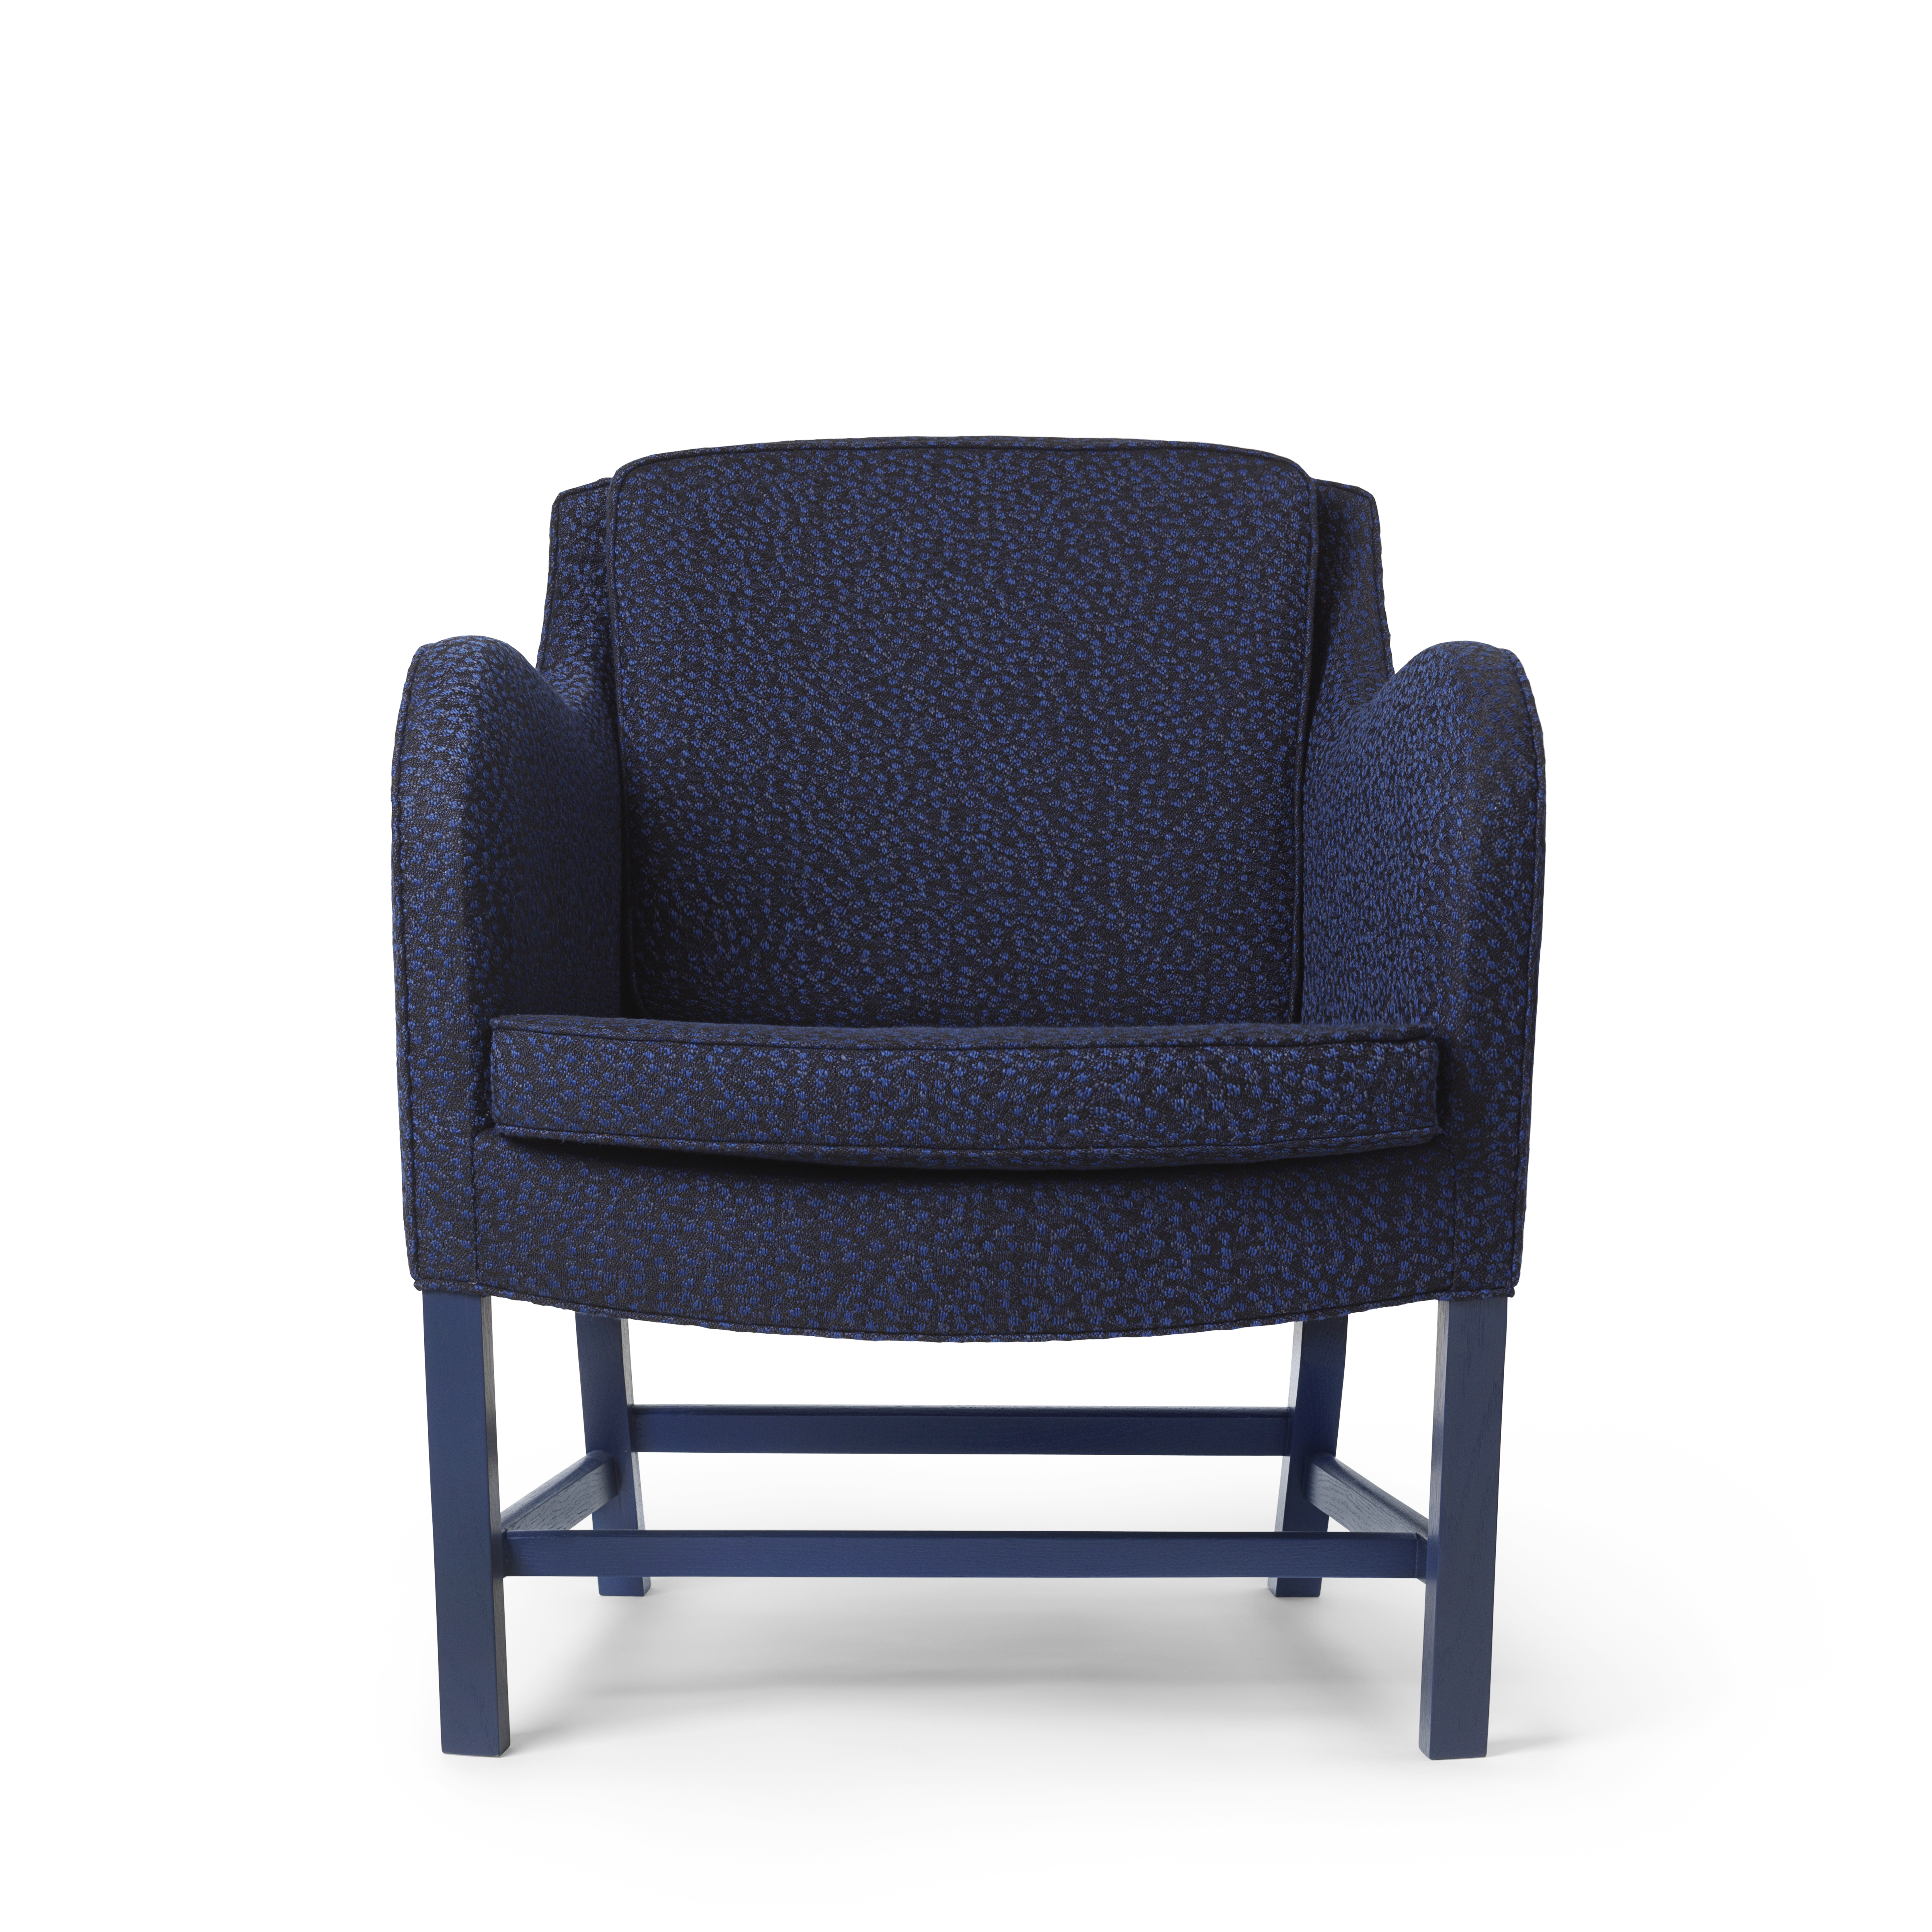 KK43960 | Mix Chair Exklusiv